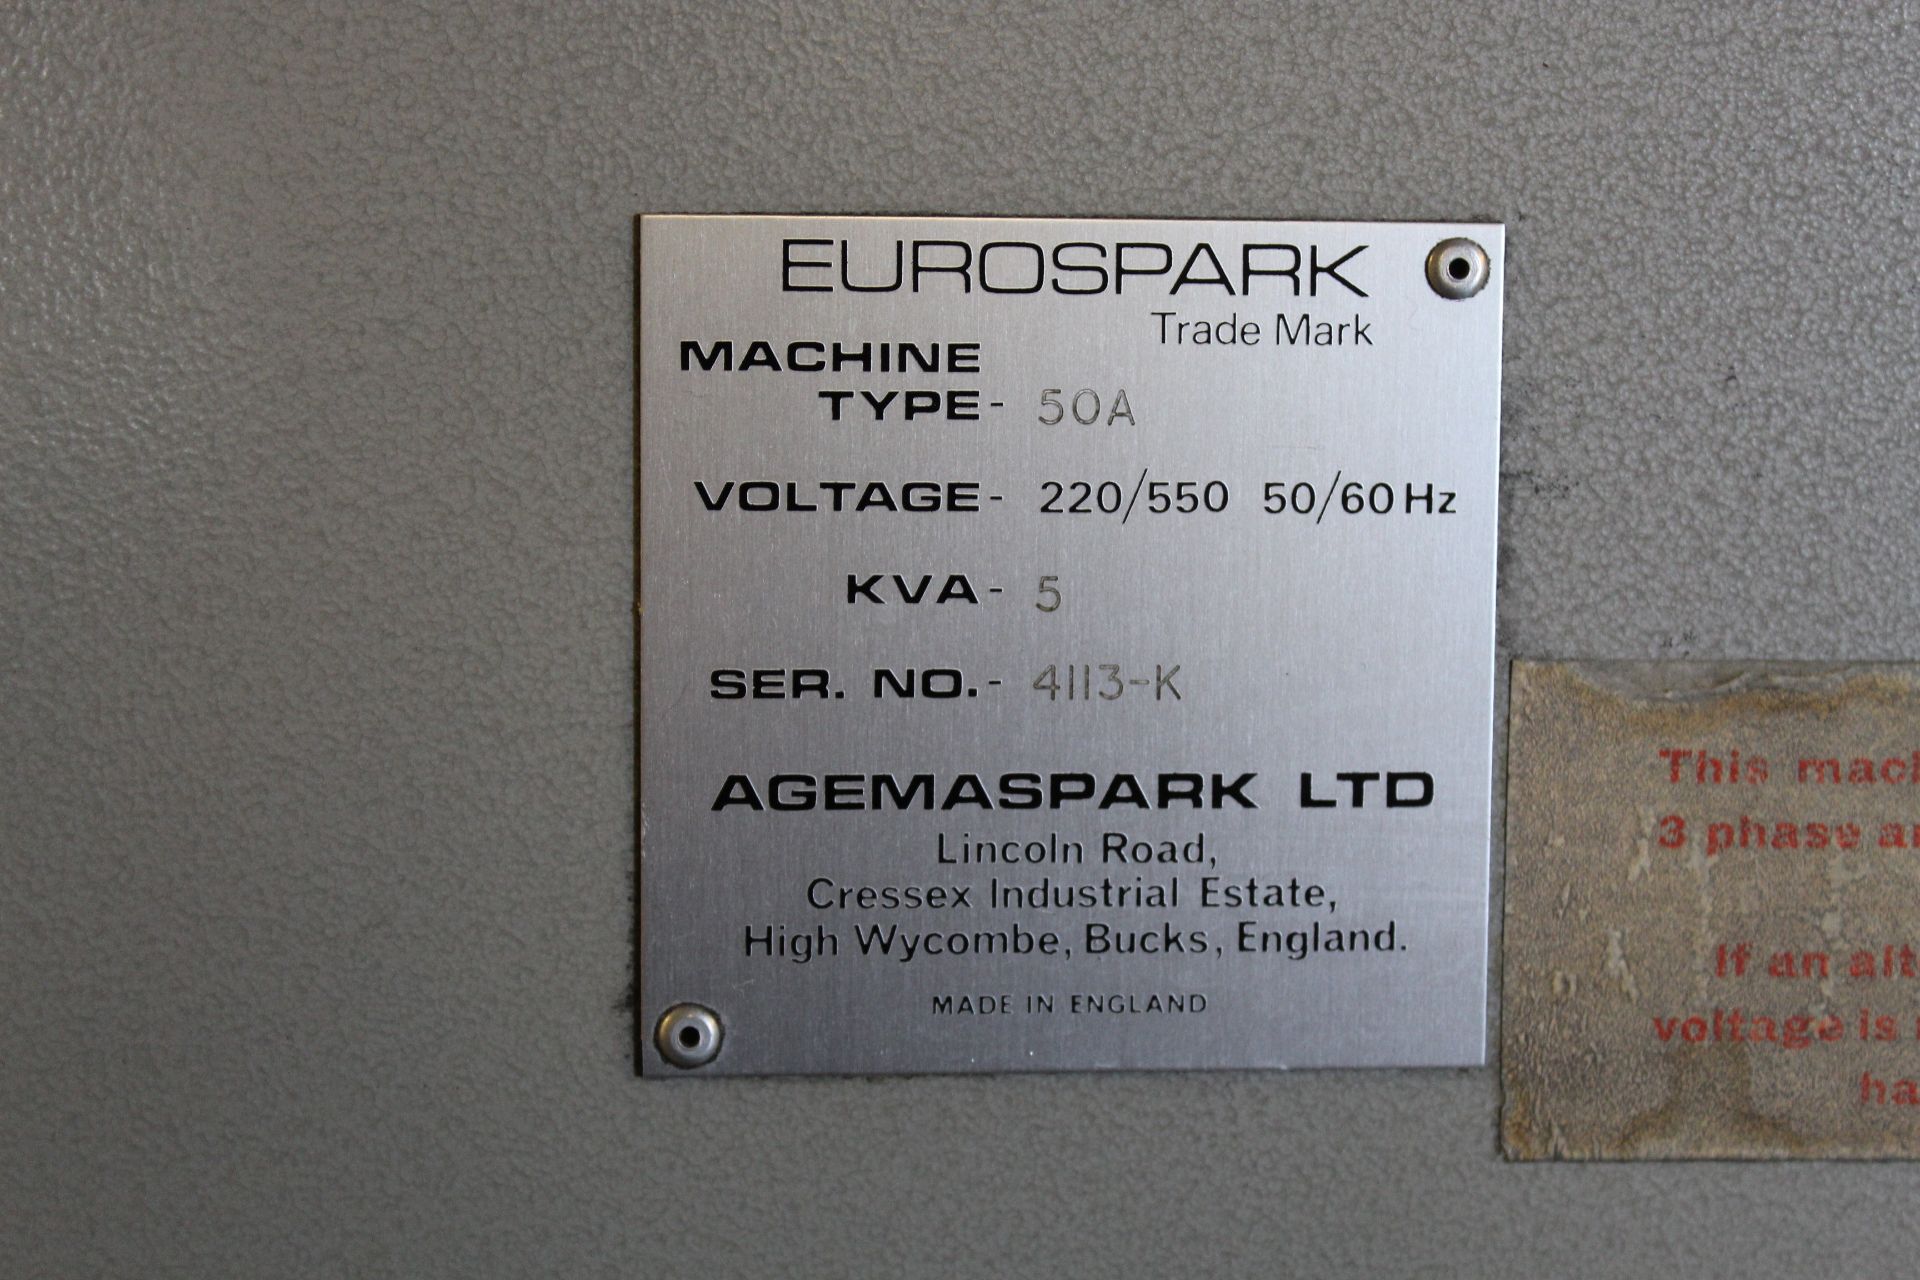 Eurospark 740 spark eroder, Serial No. 3777-K, voltage: 220/550 -50/60Hz, KVA: 2 with Eurospark - Image 11 of 15